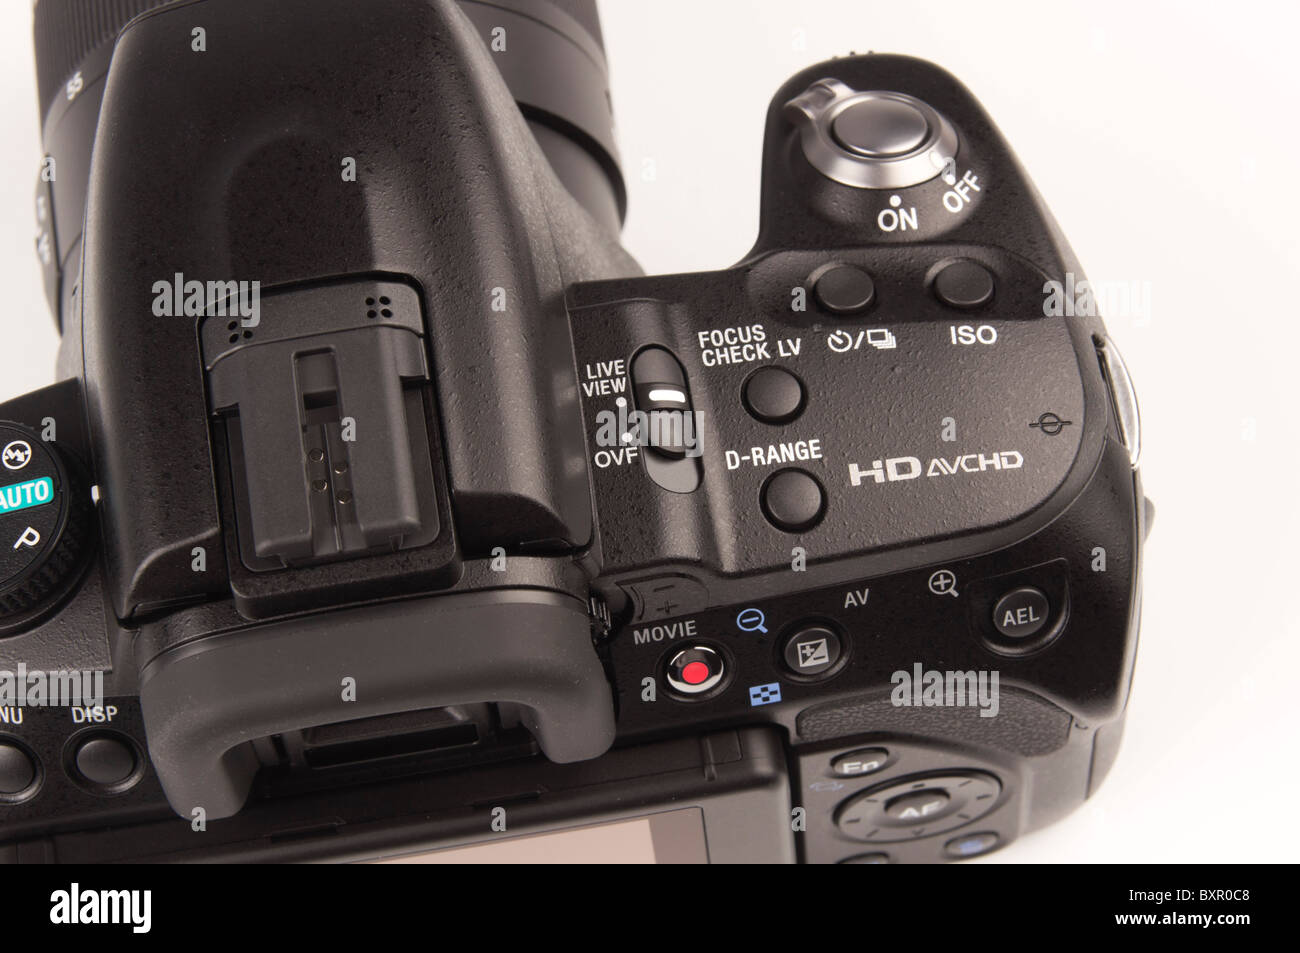 Sony Alpha 580 camera (2010) - digital SLR - controls Stock Photo